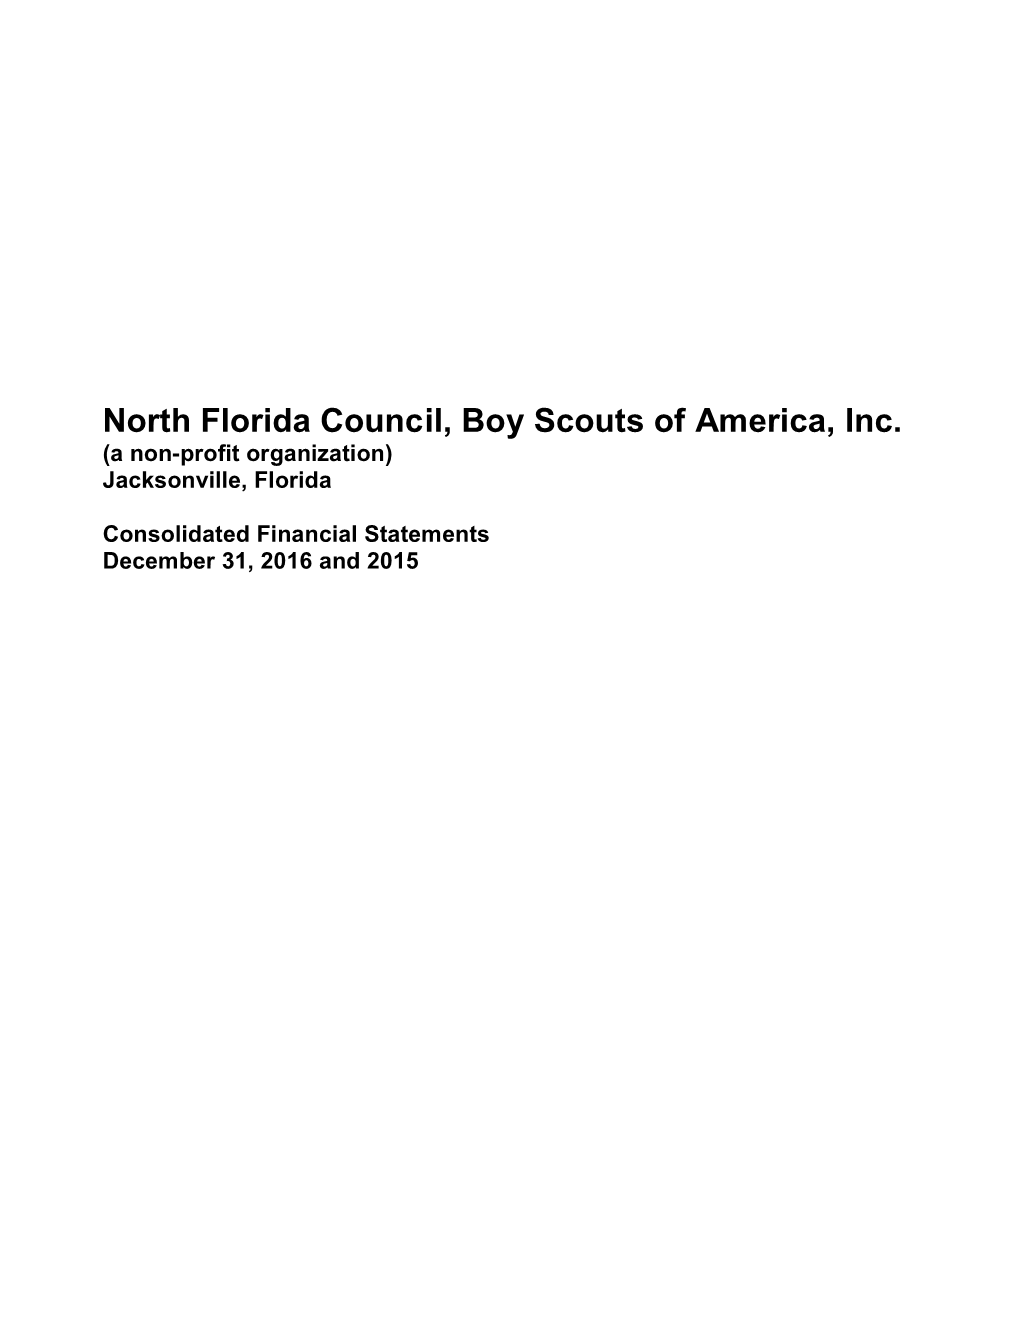 North Florida Council Financial Statements